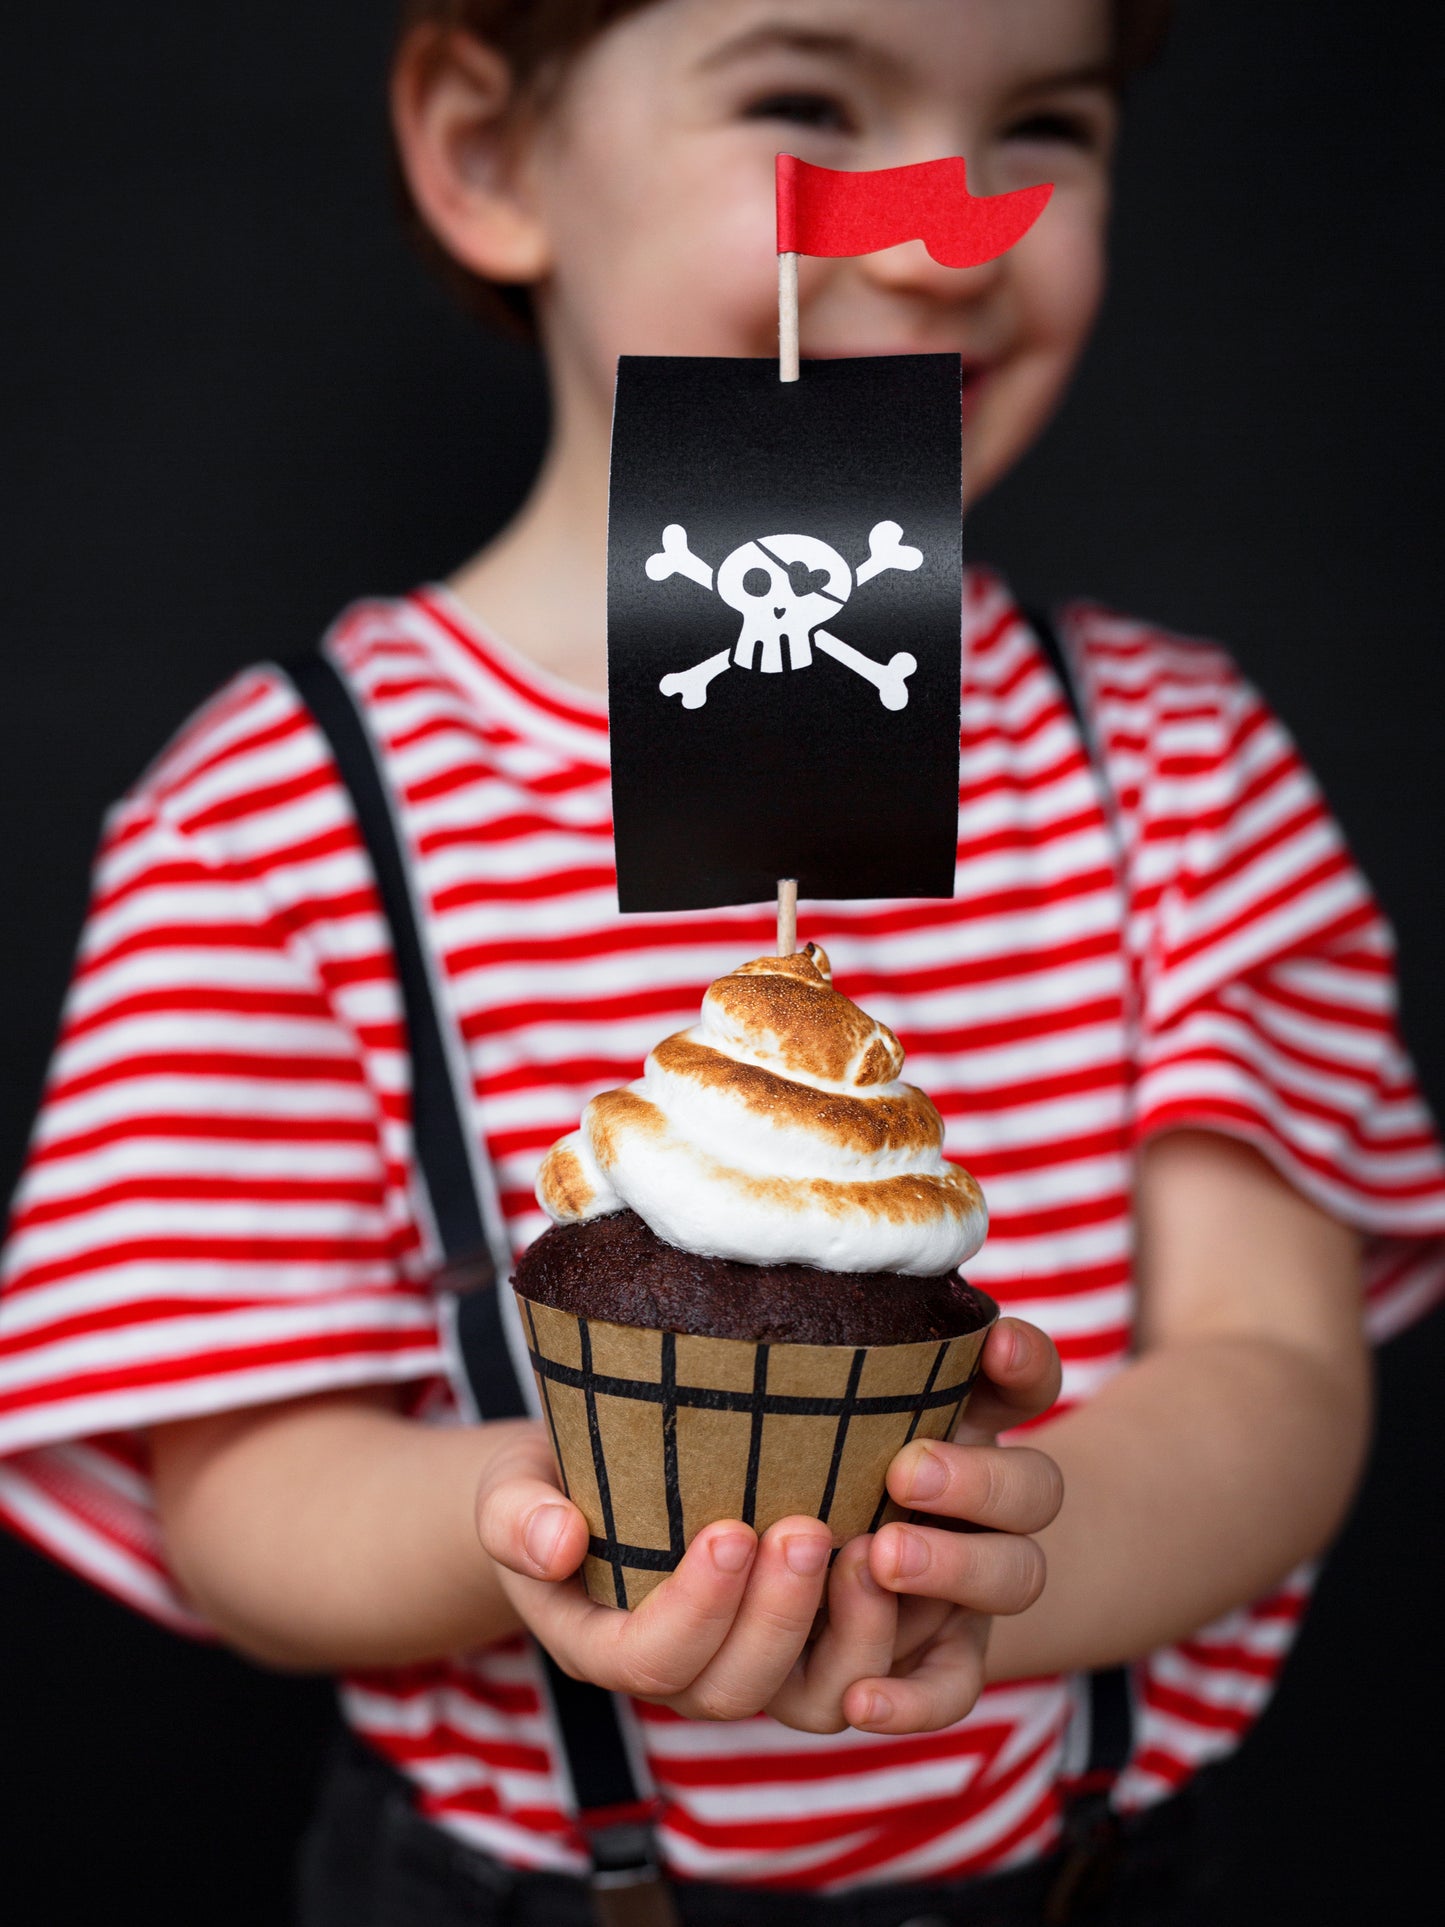 Pirate Sails Cupcake Set (6 pk)